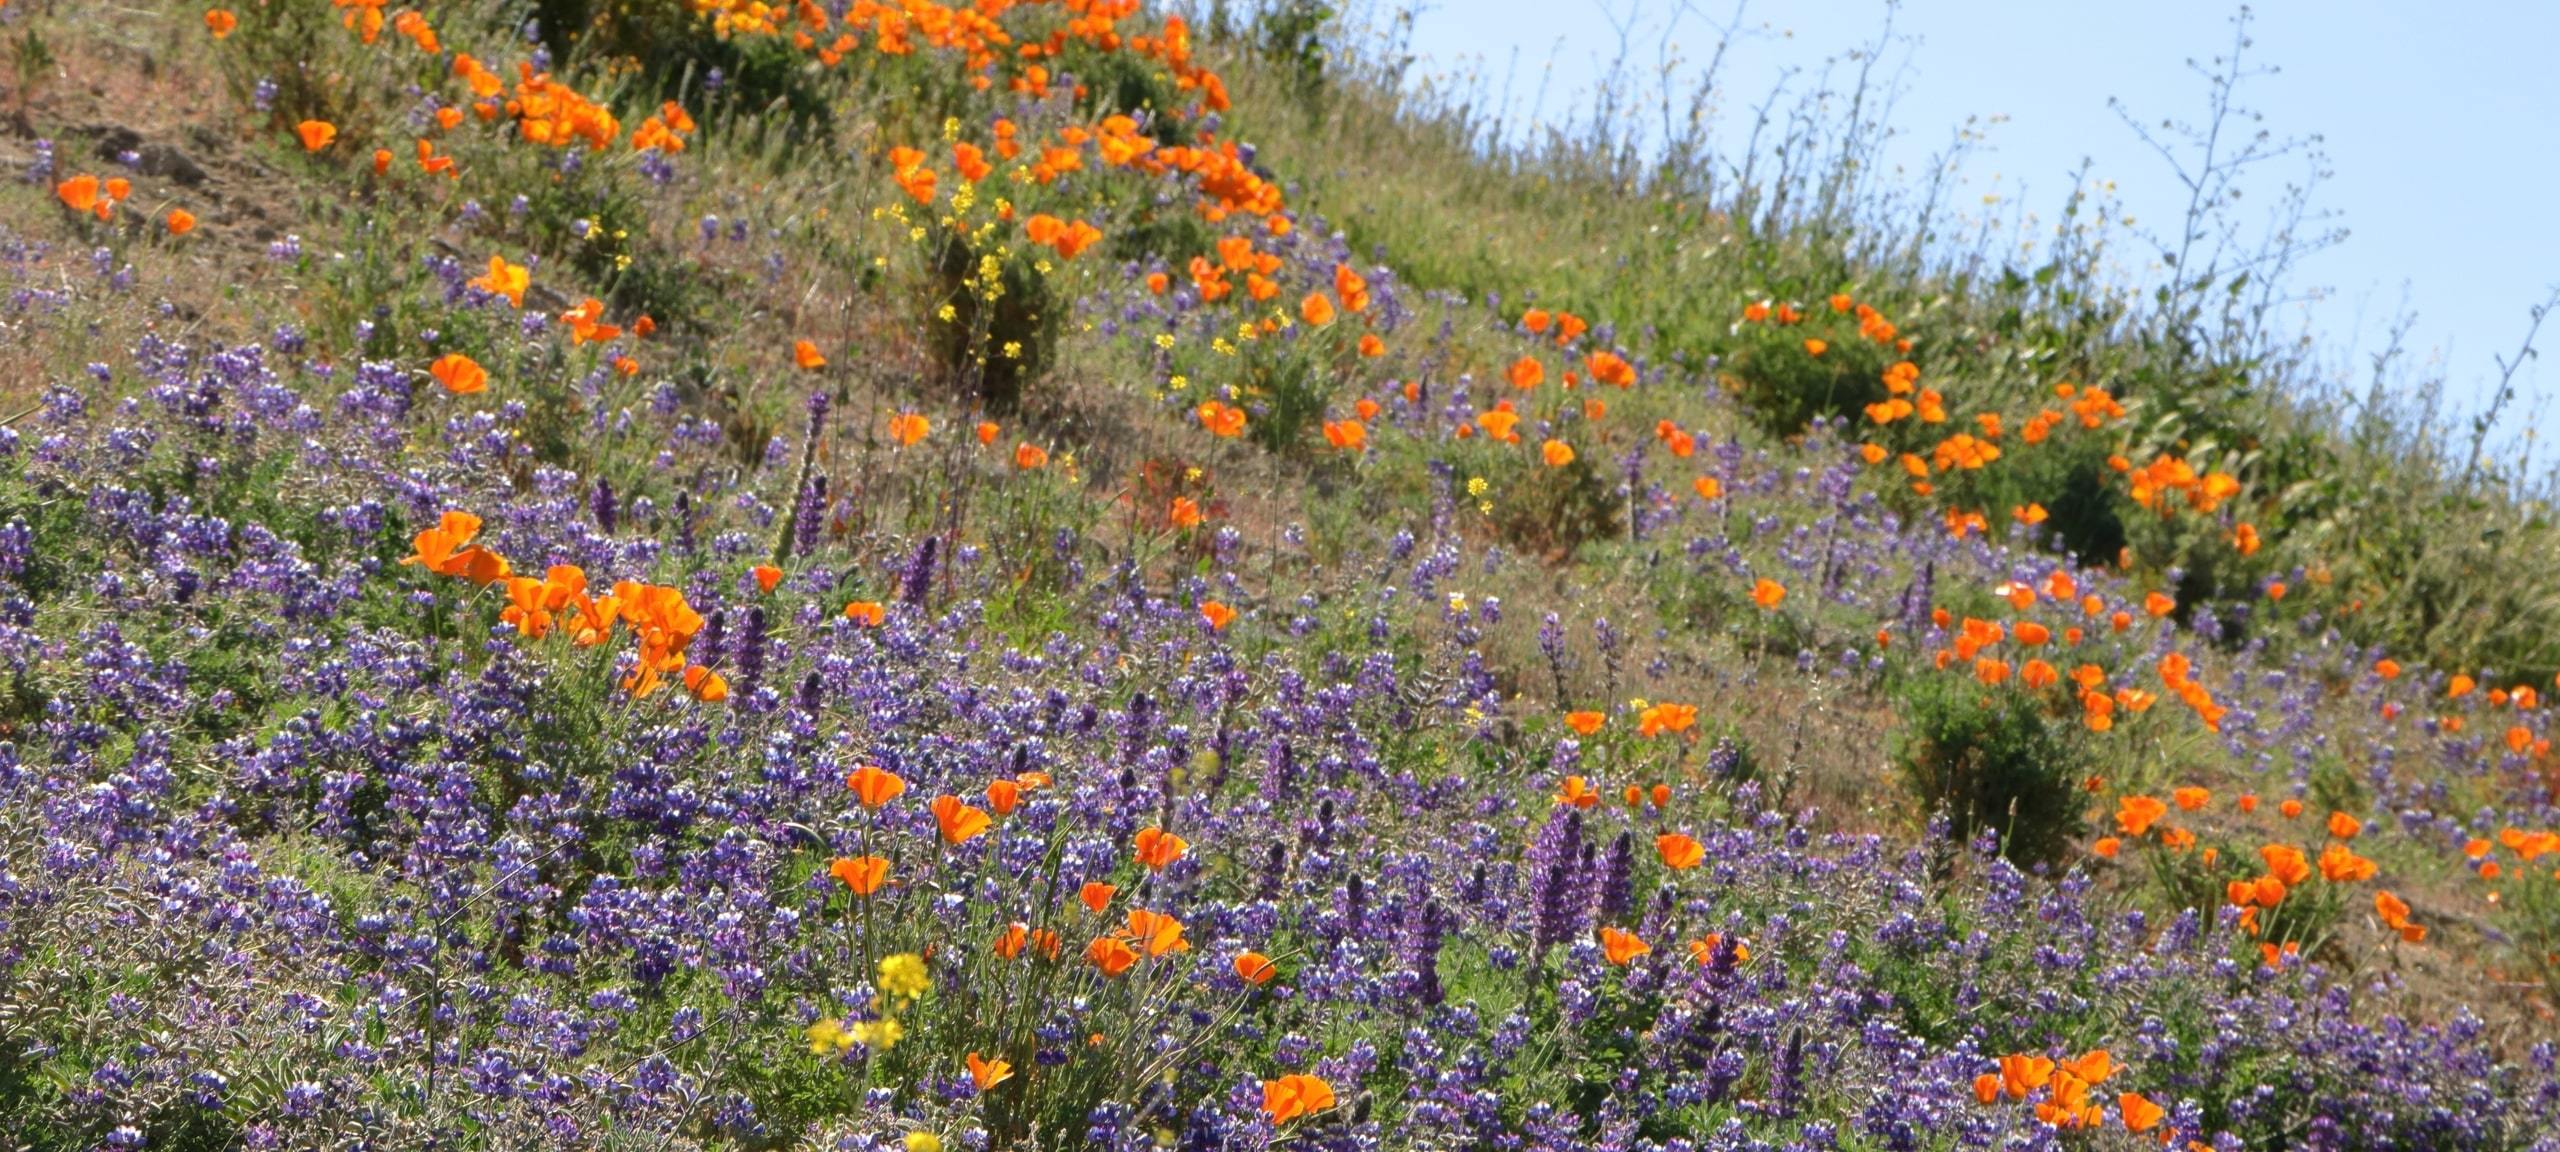 Field of Lupine and Santa Cruz poppy flowers near Glenwood Estates